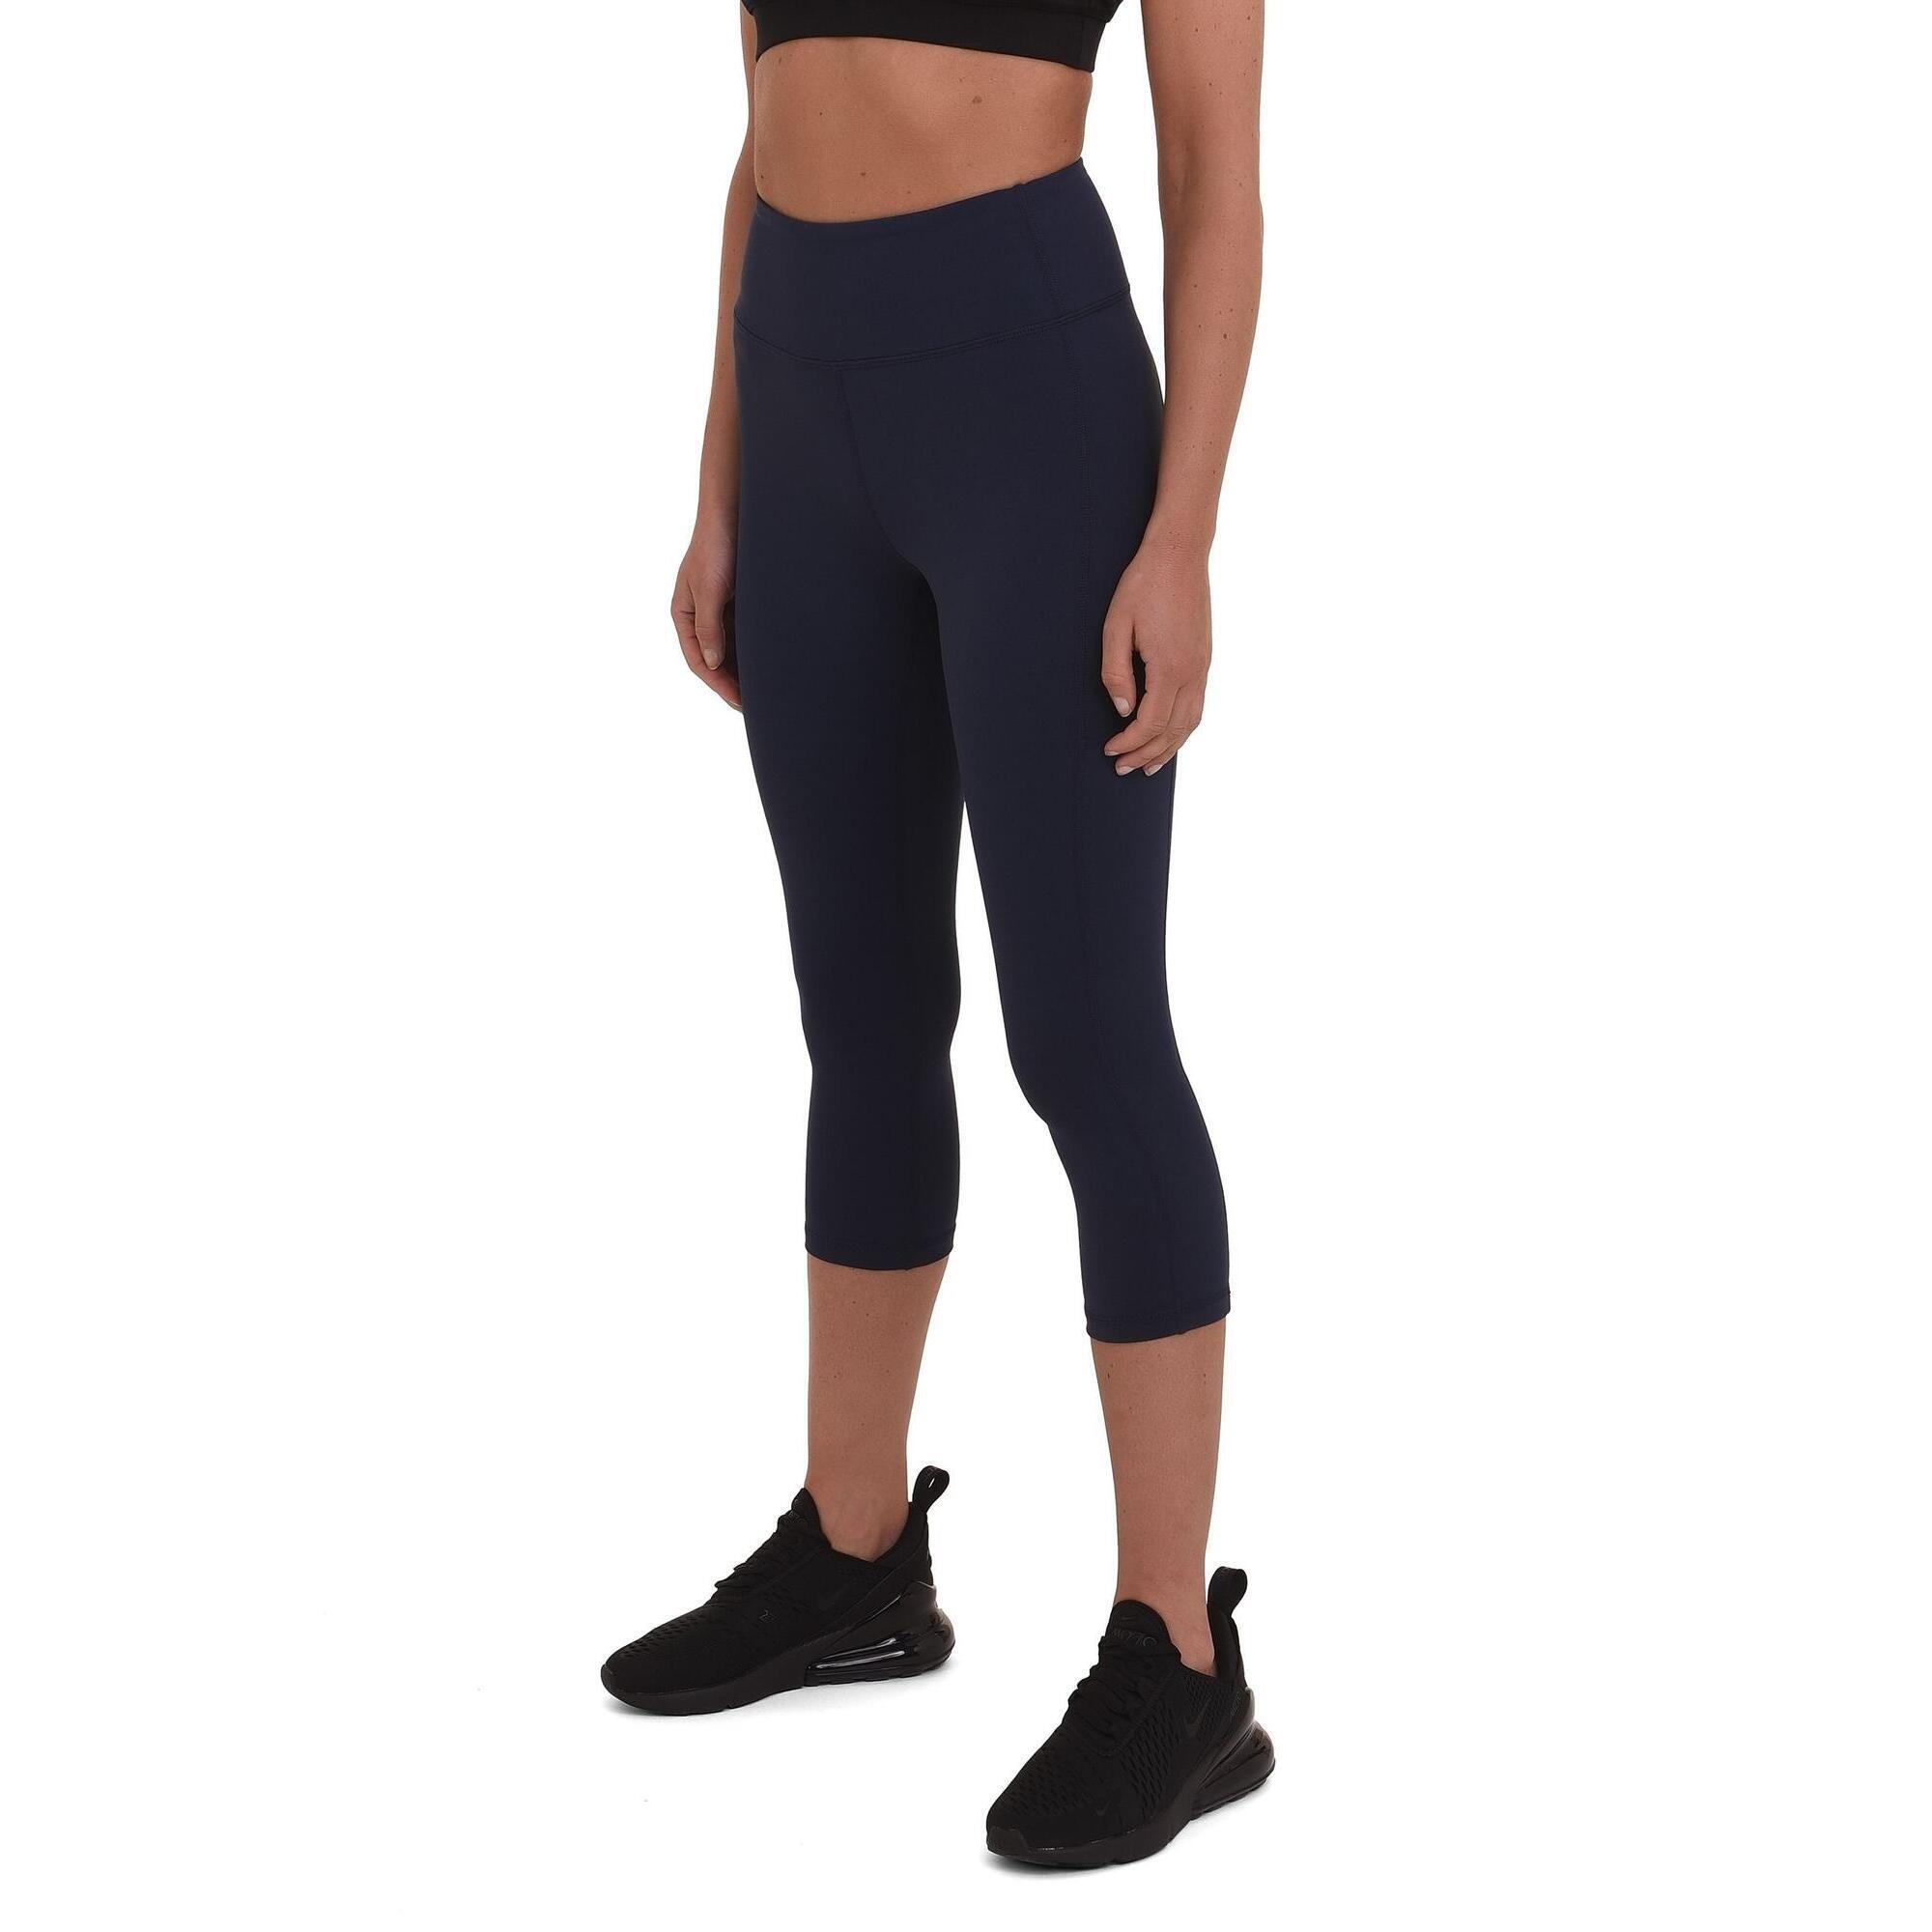 TCA Women's Equilibrium Capri Leggings with Side Pocket - Navy Eclipse